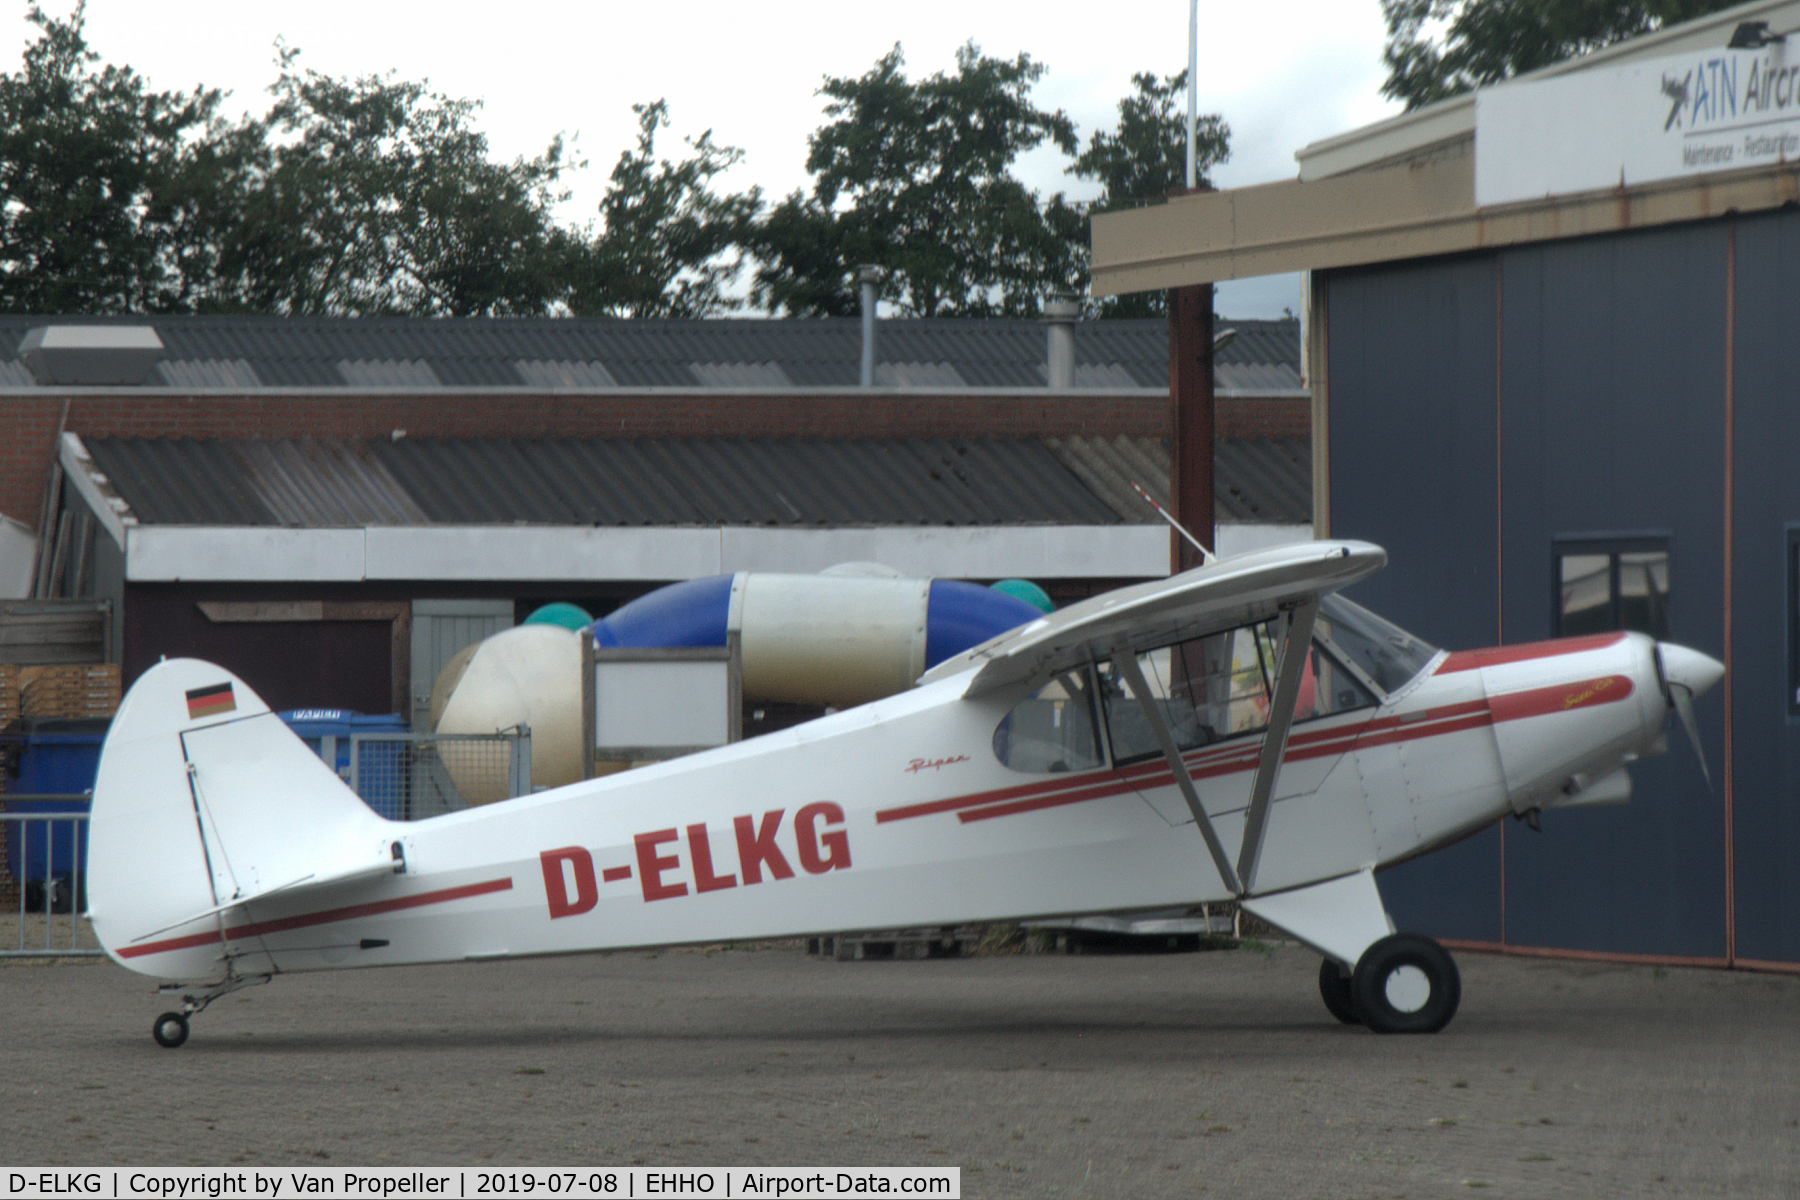 D-ELKG, Piper PA-18 150 Super Cub C/N 18-7709056, Piper PA-18-150 Super Cub at Hoogeveen airfield, the Netherlands